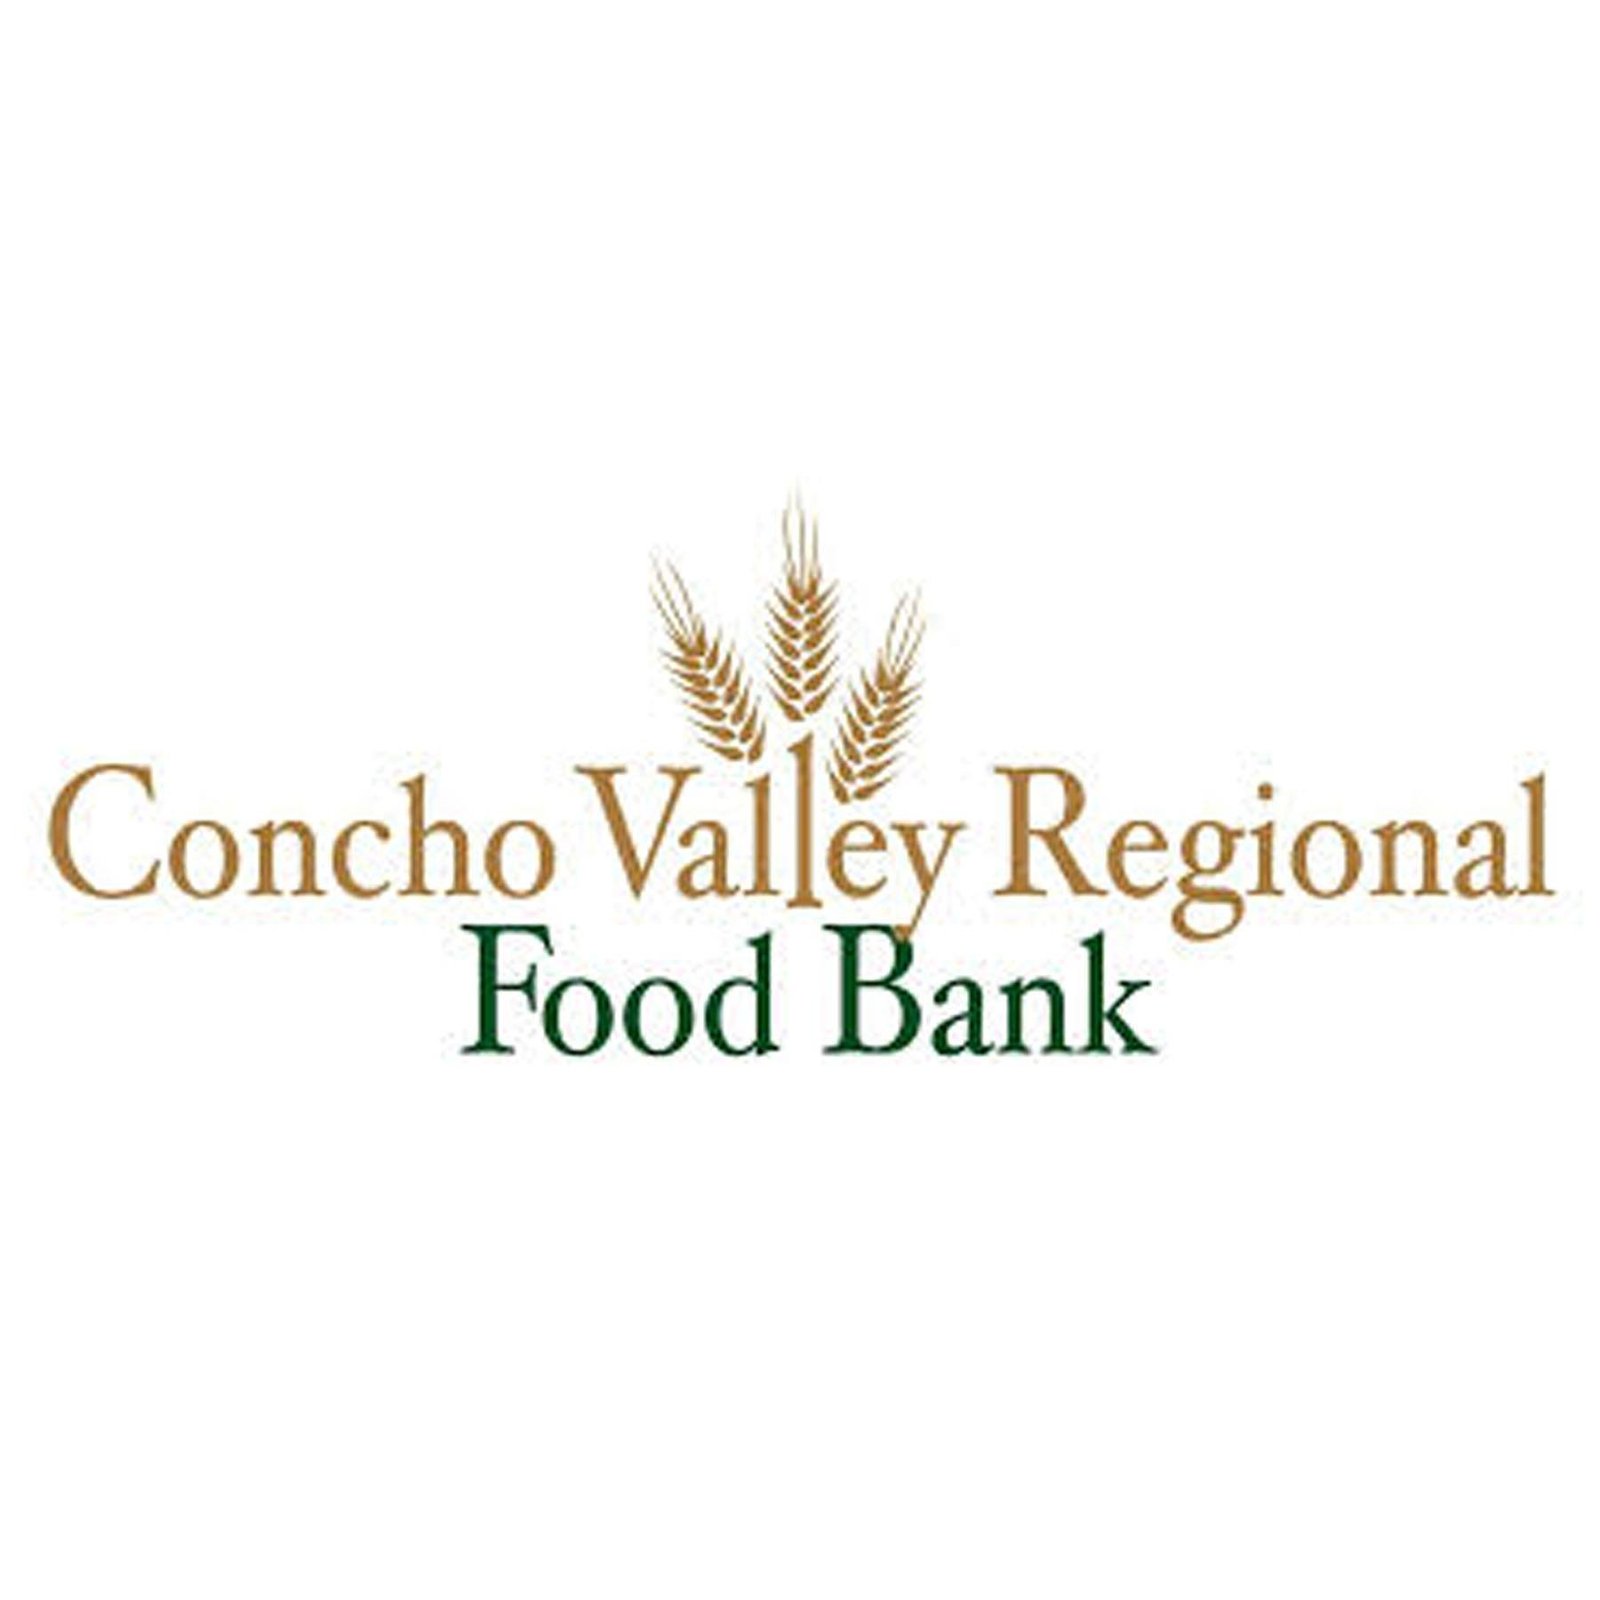 Food Bank Concho Valley Regional